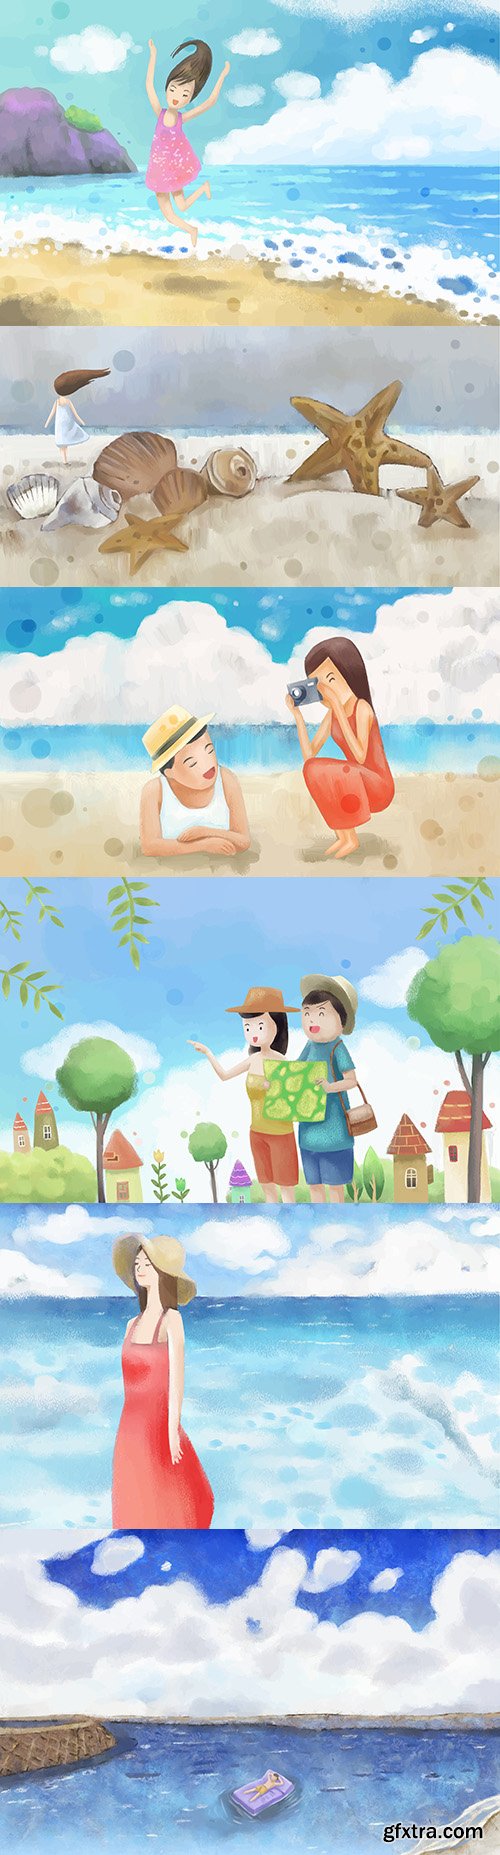 Summer holiday at sea watercolor background